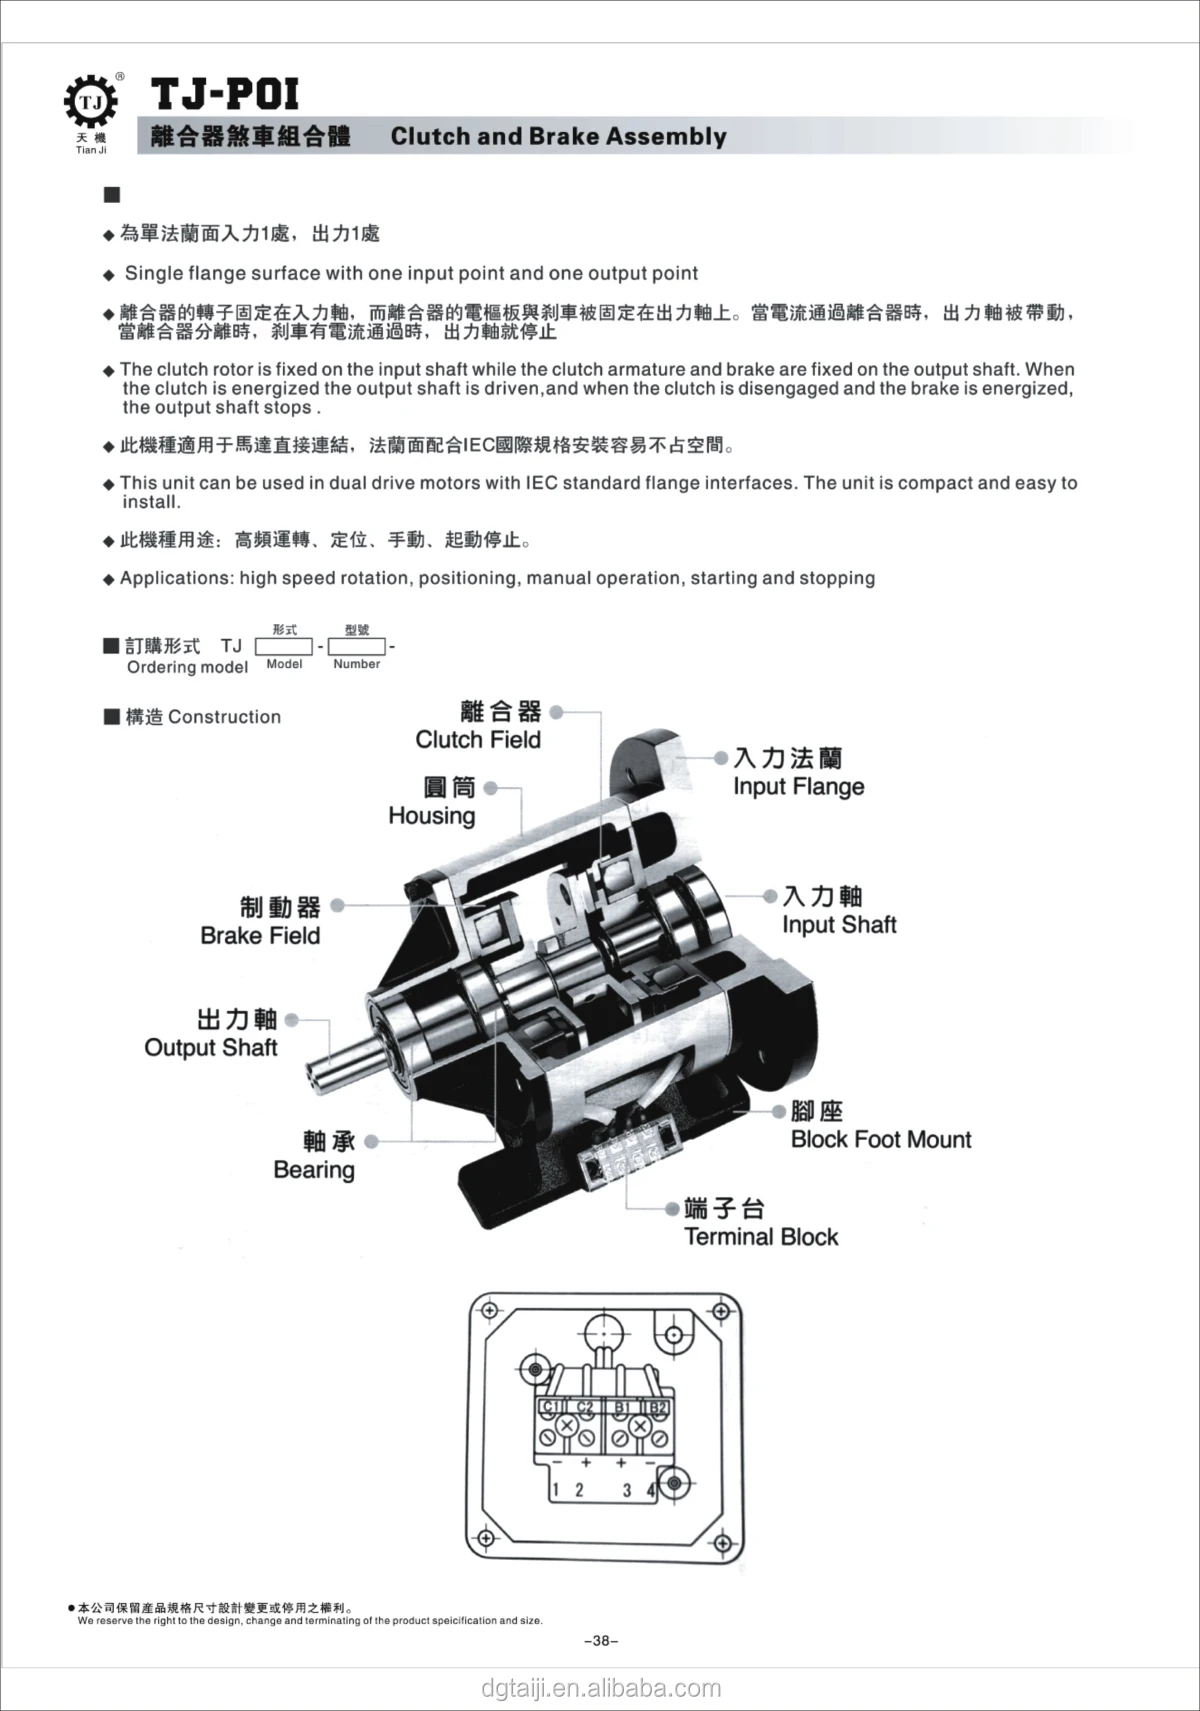 Taiwan technology single flange clutch brake with motor